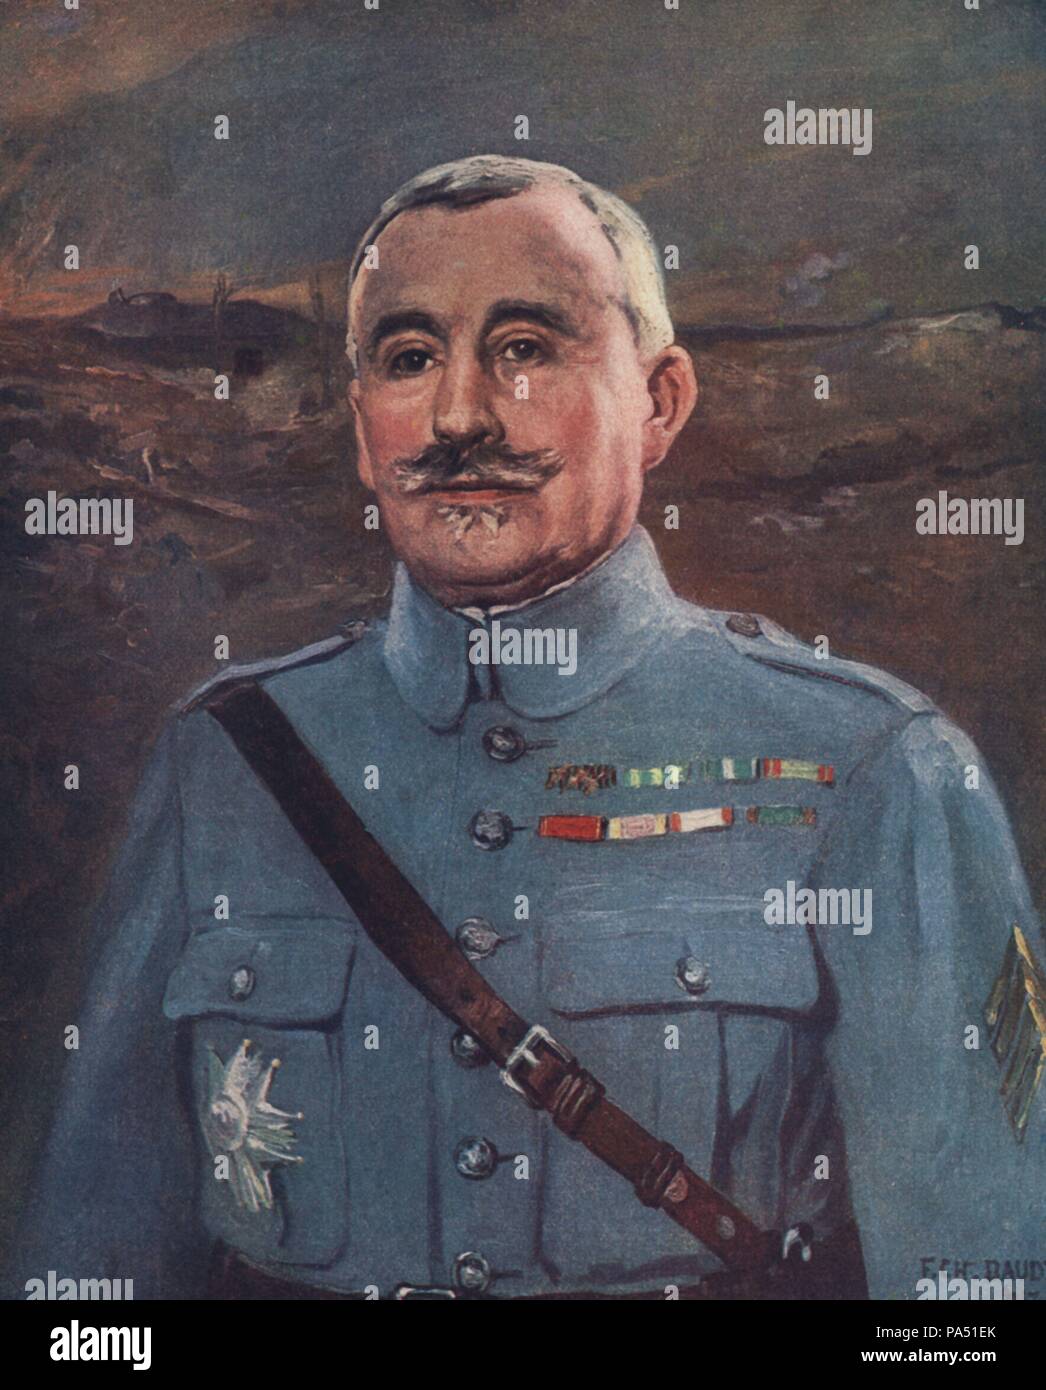 Primera guerra mundial (1914-1918). Nivelle, Robert George (1856-1924), destacado general francés. Grabado de 1916. Stock Photo